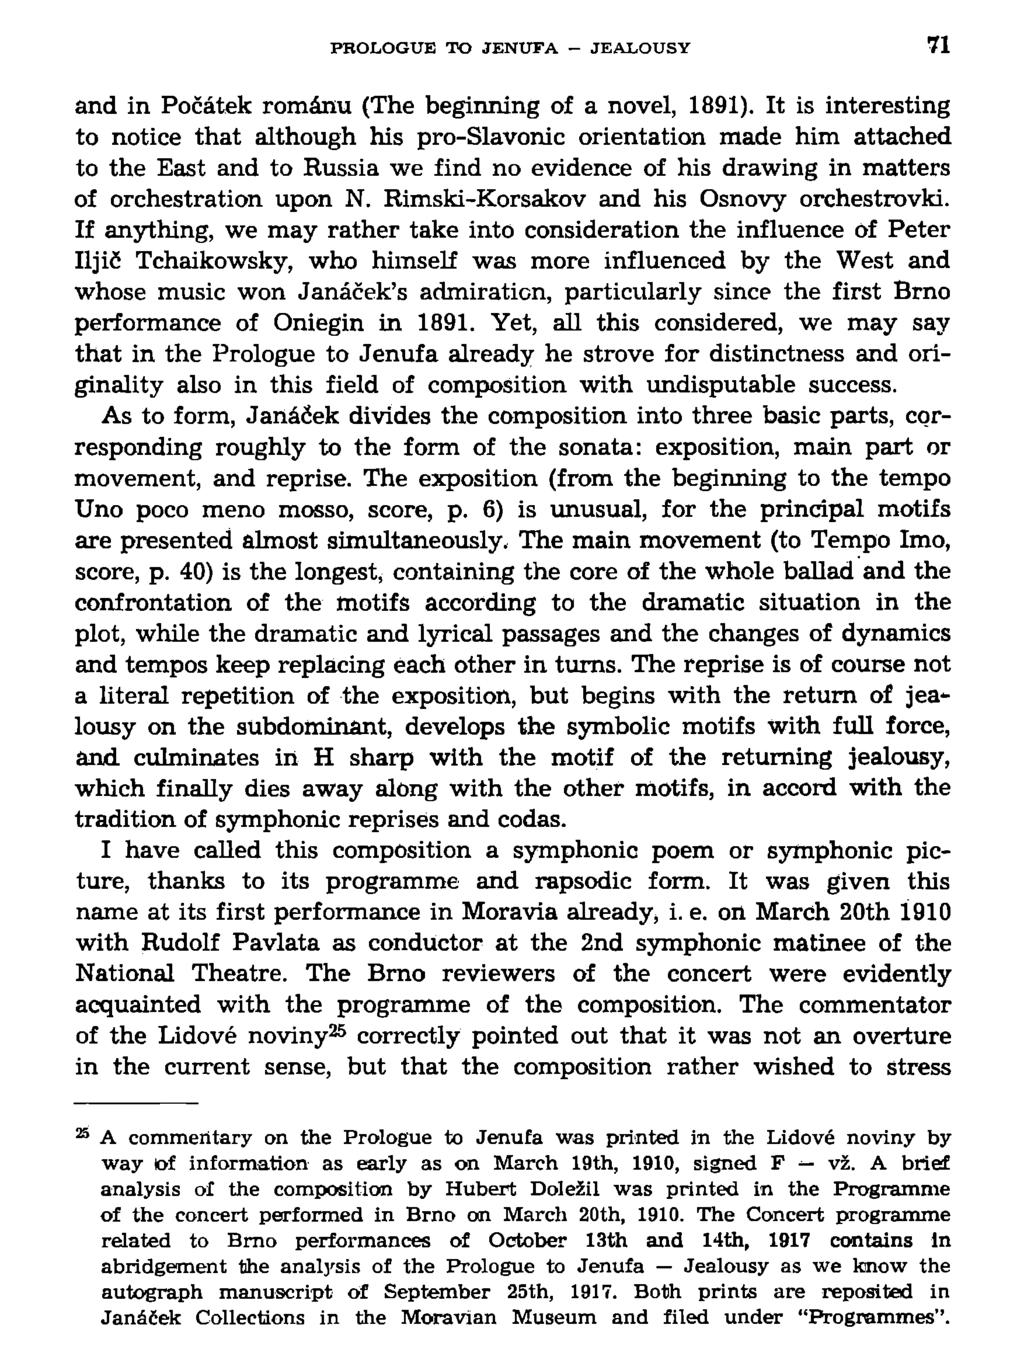 PROLOGUE TO JENUFA - JEALOUSY 71 and in Pocatek romanu (The beginning of a novel, 1891).